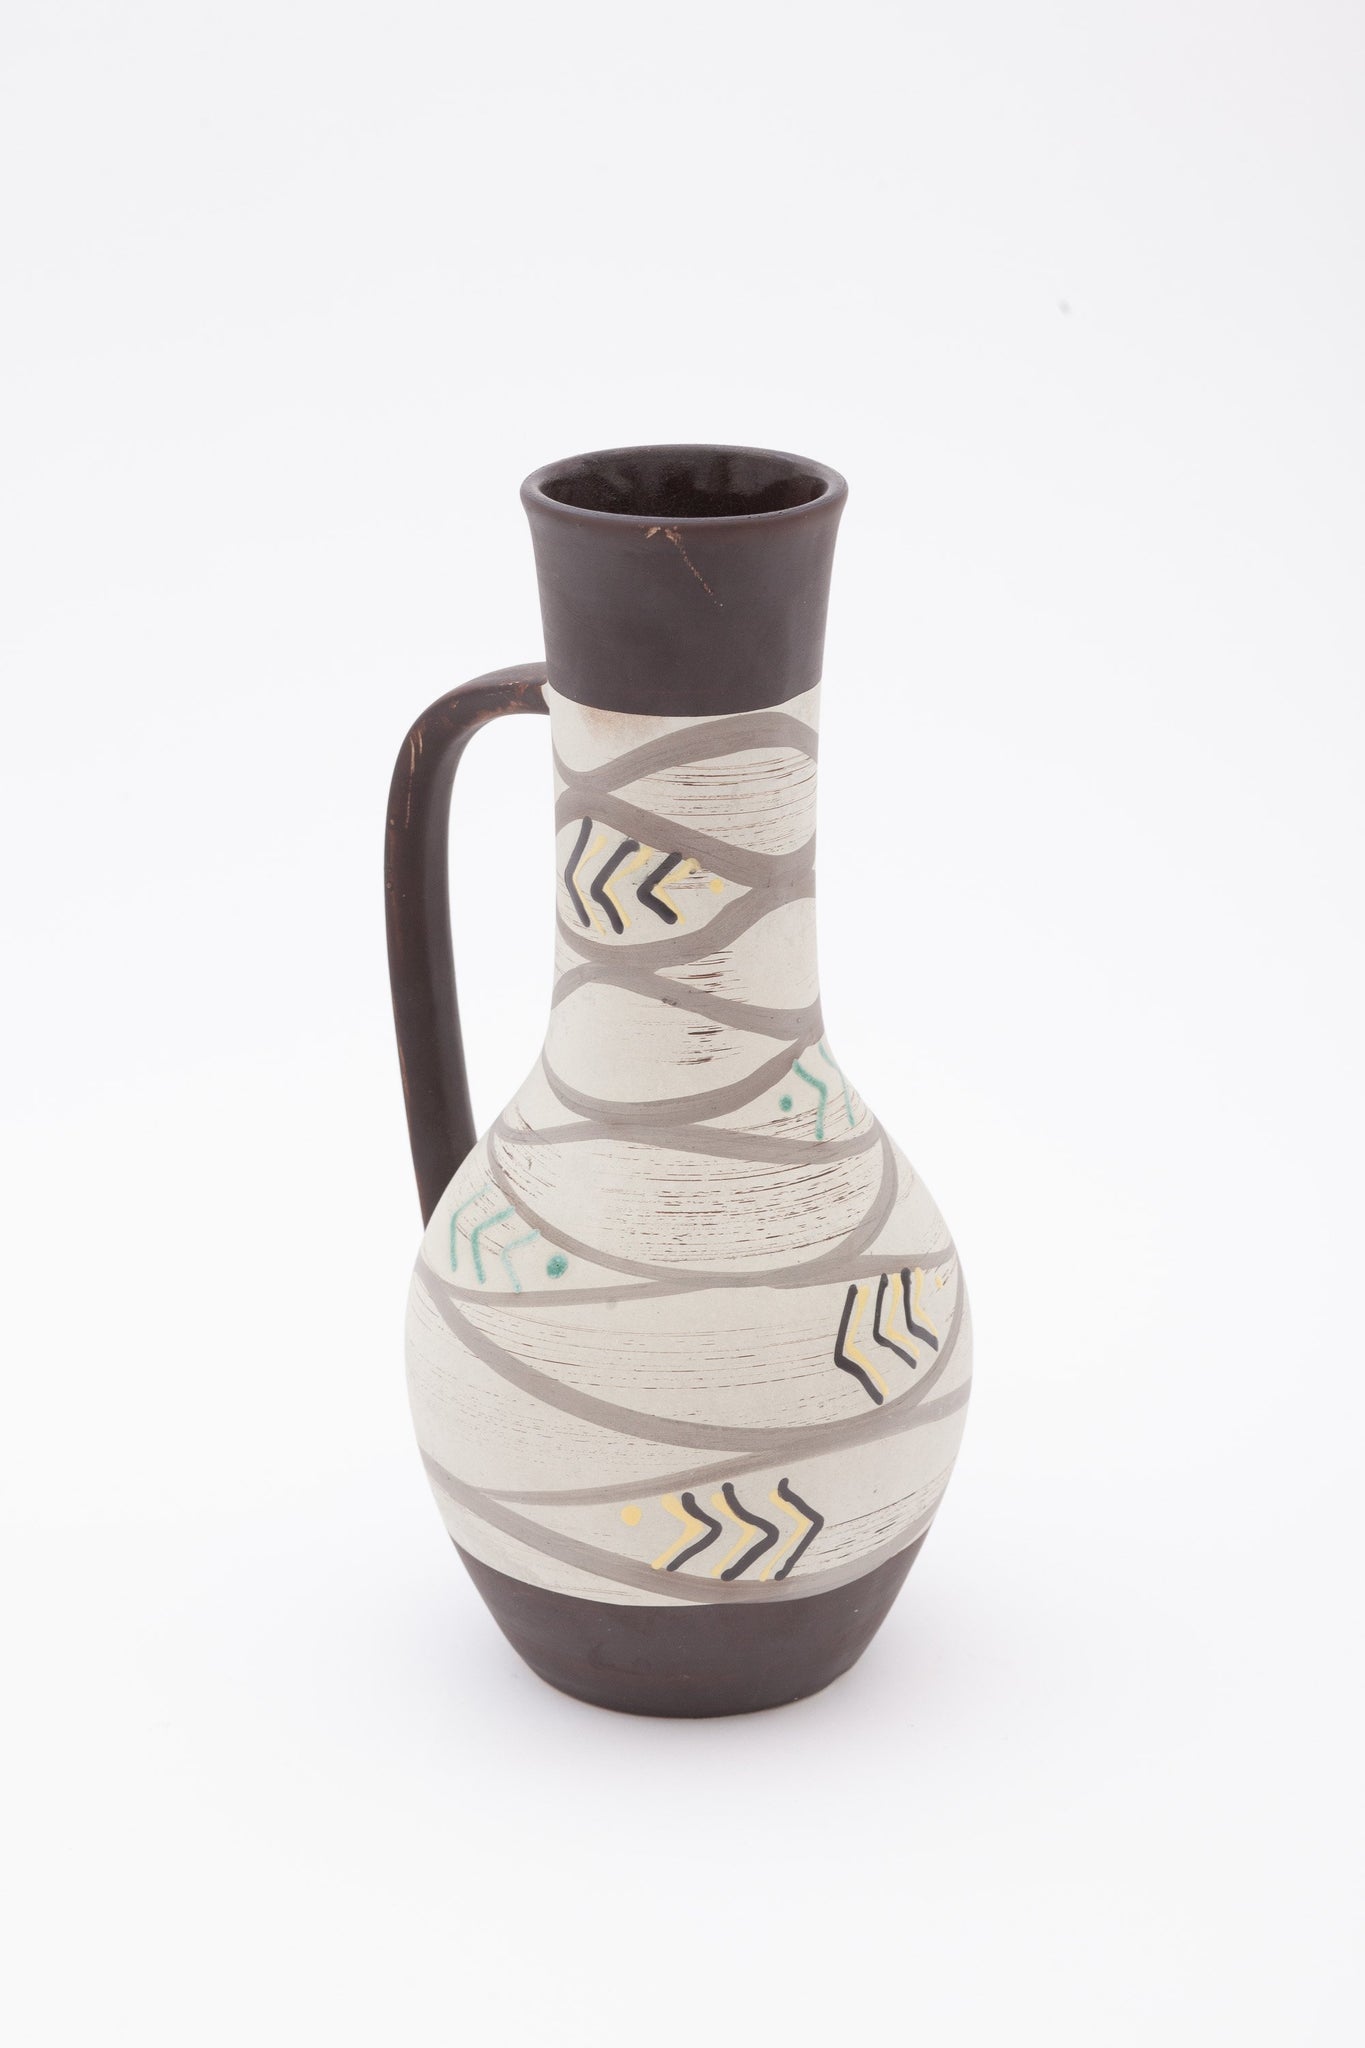 1950er Jahre Keramik Vase